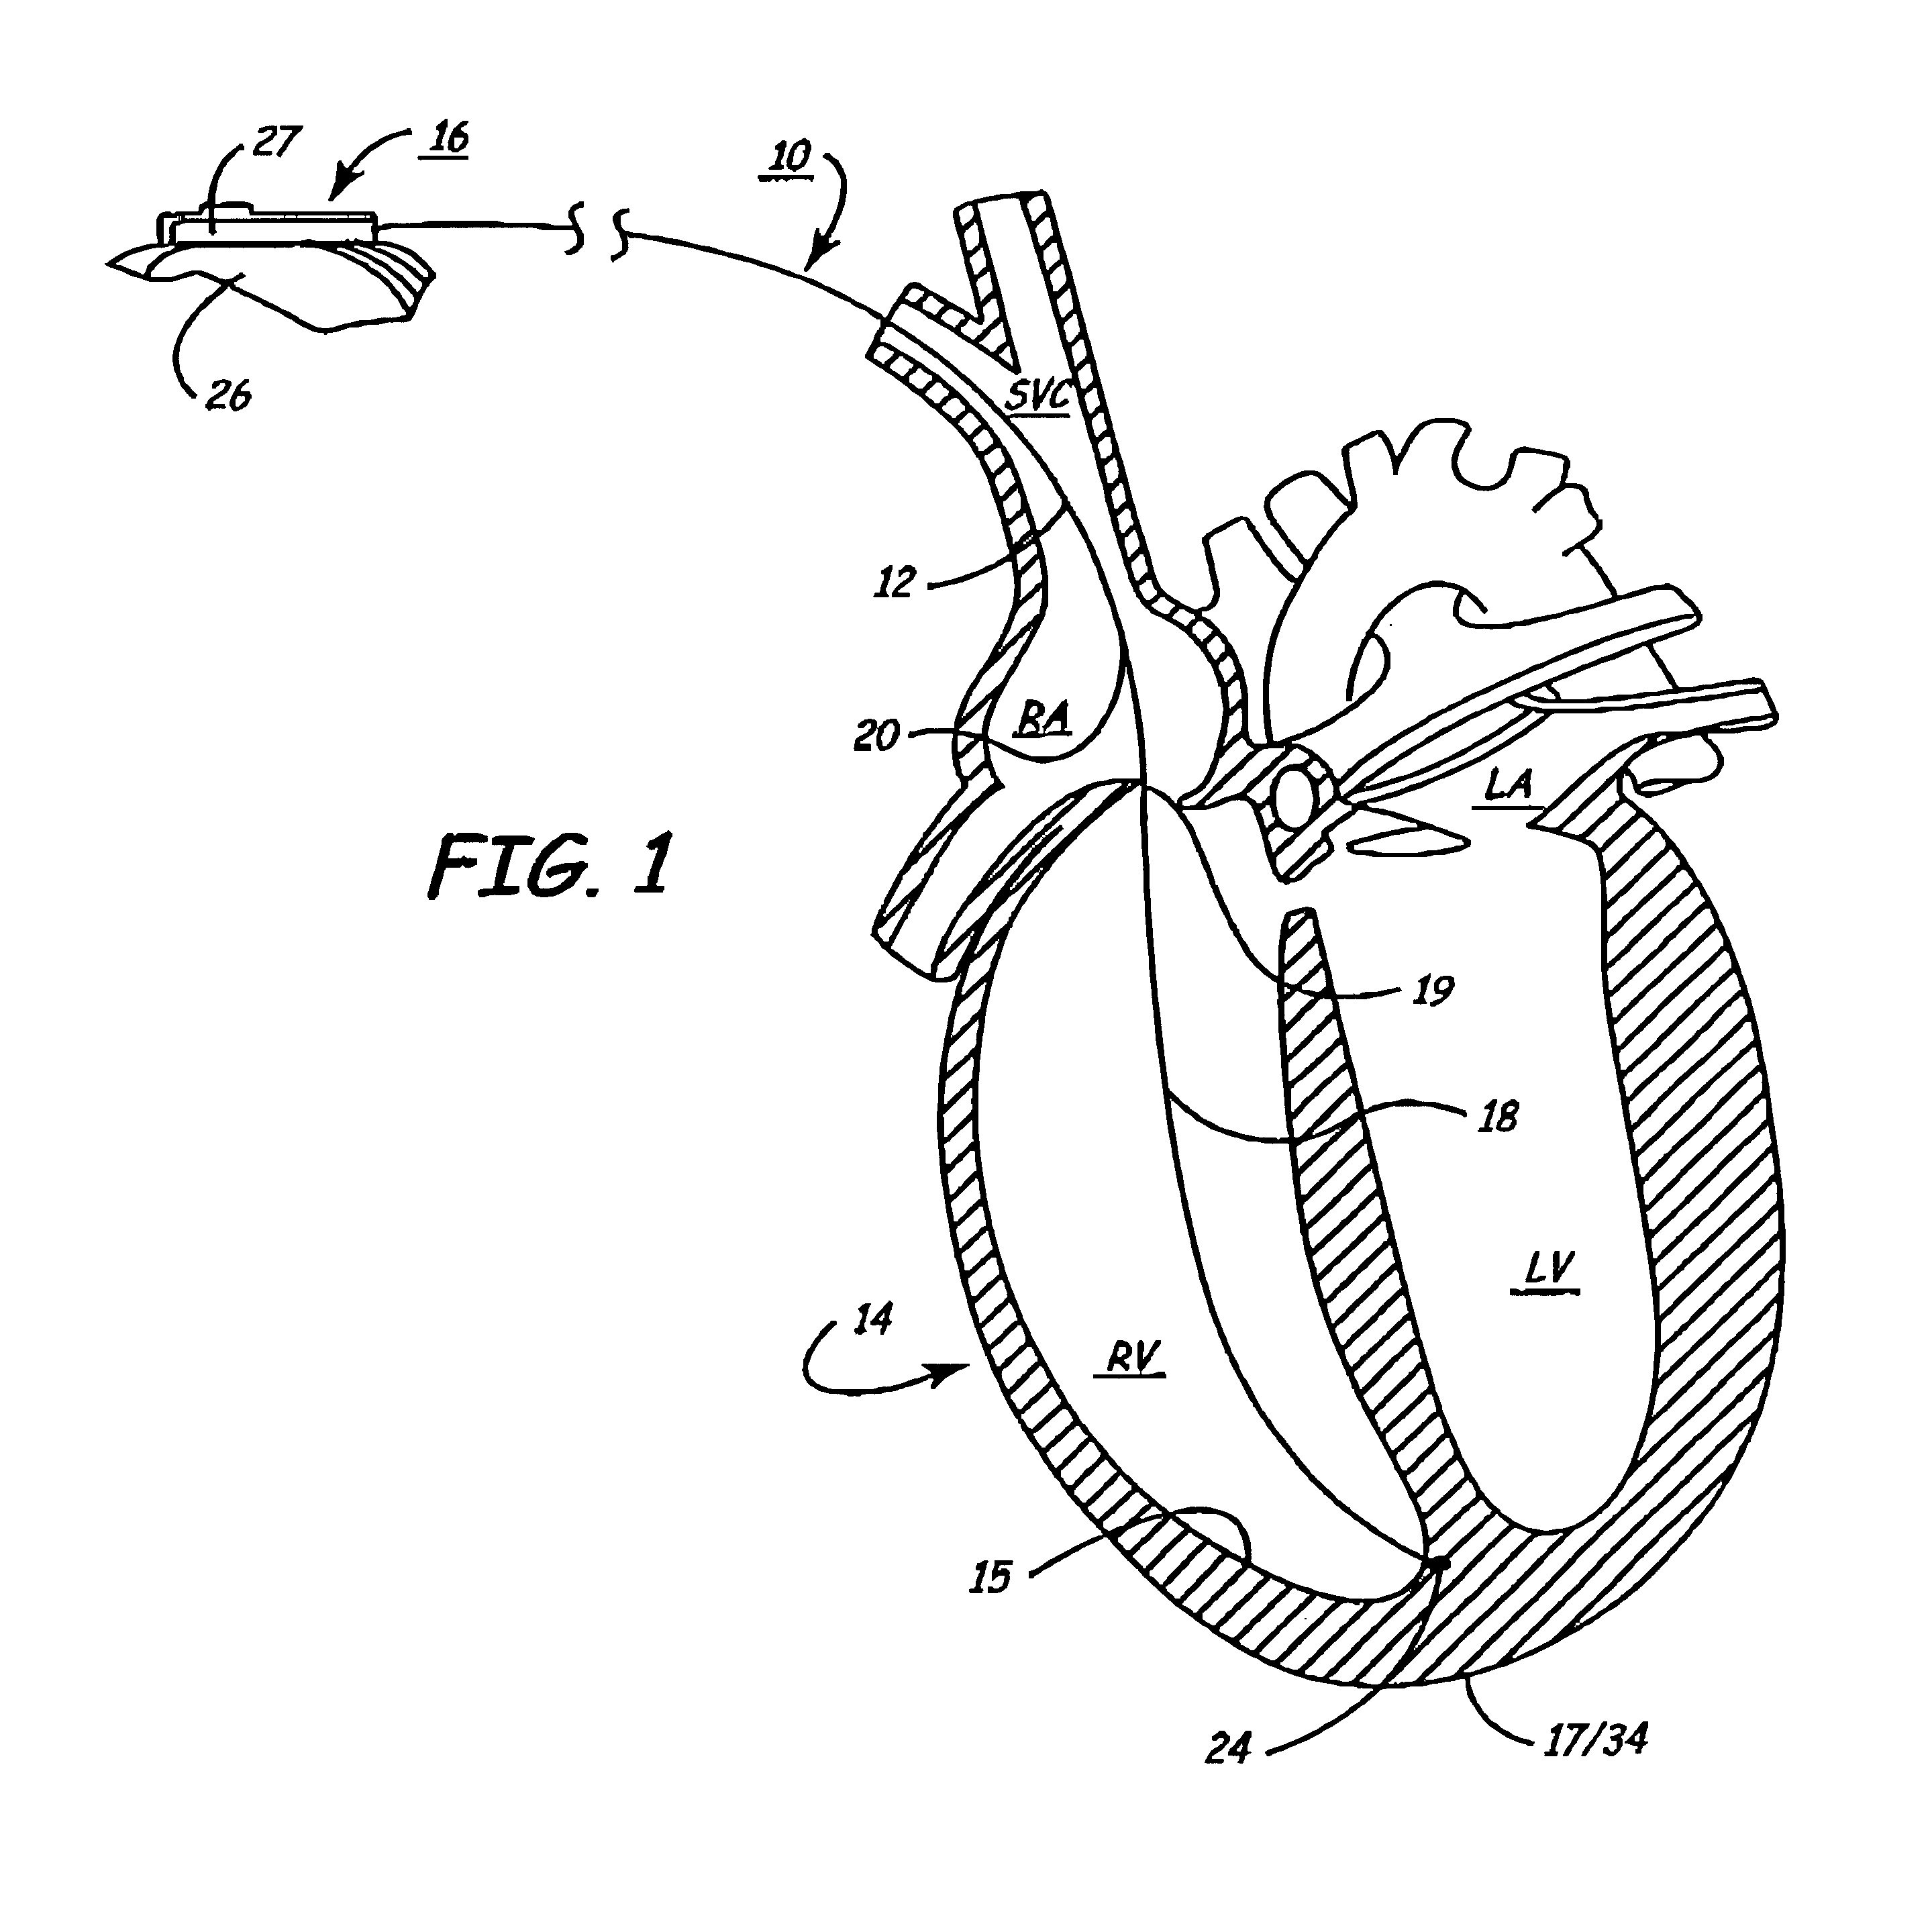 Arrangement for implanting an endocardial cardiac lead